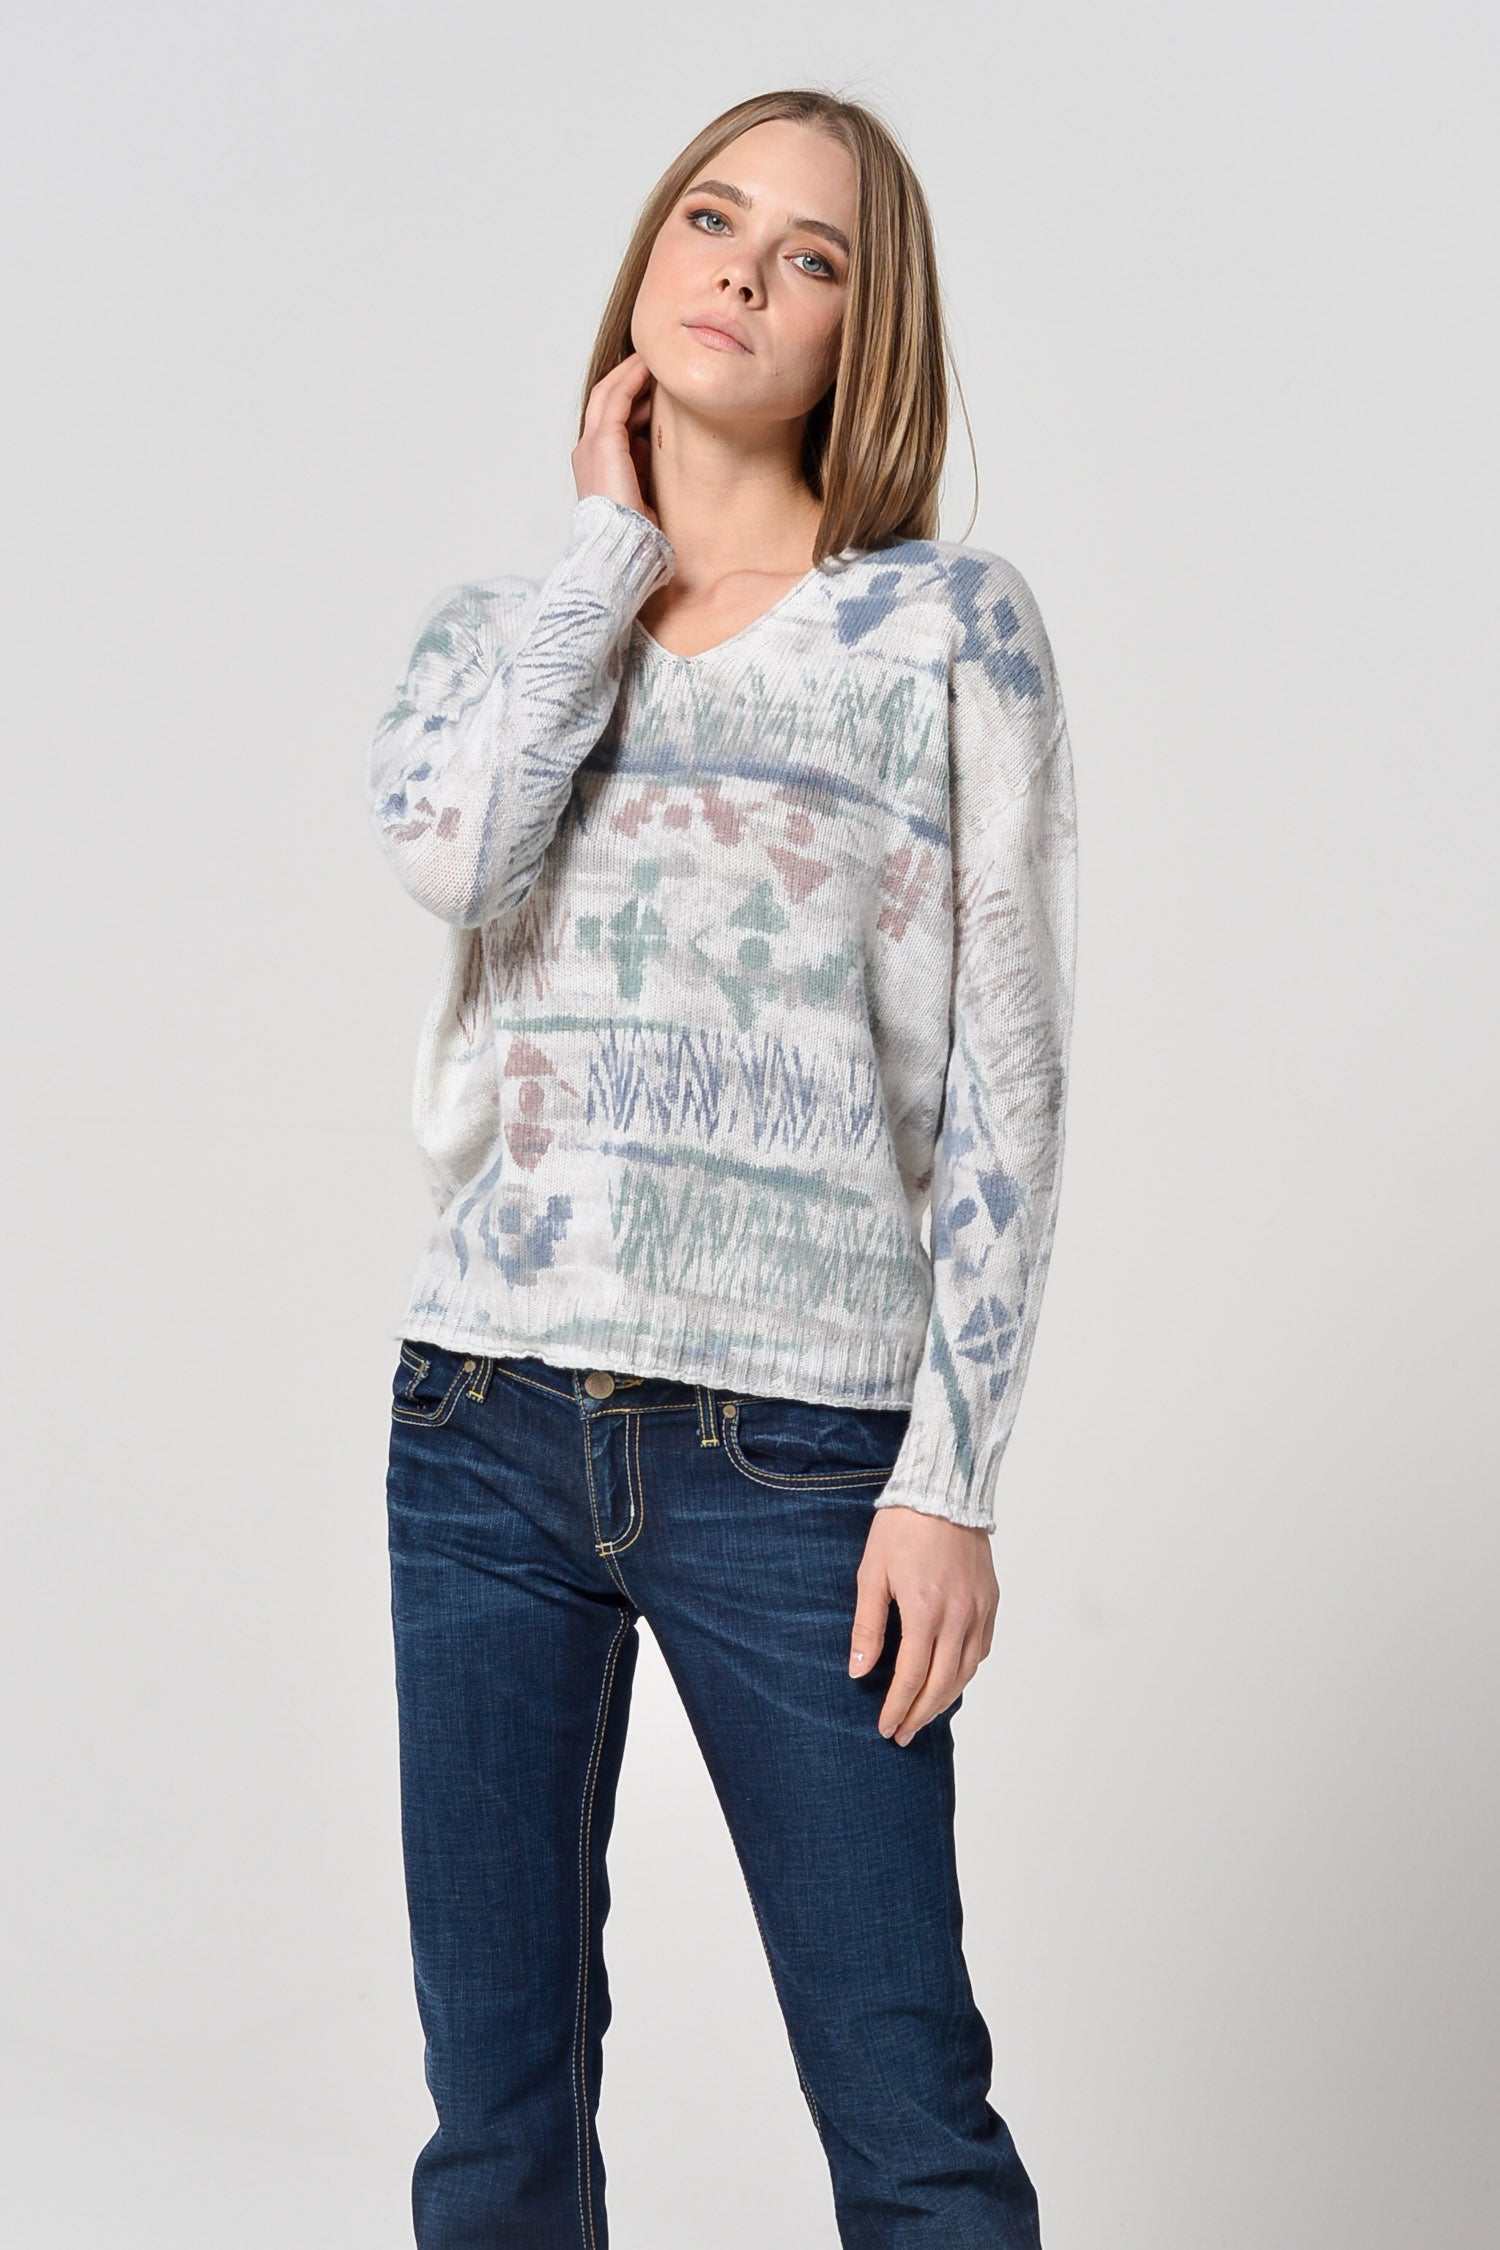 Oaken Ethnic Sweater - Topia